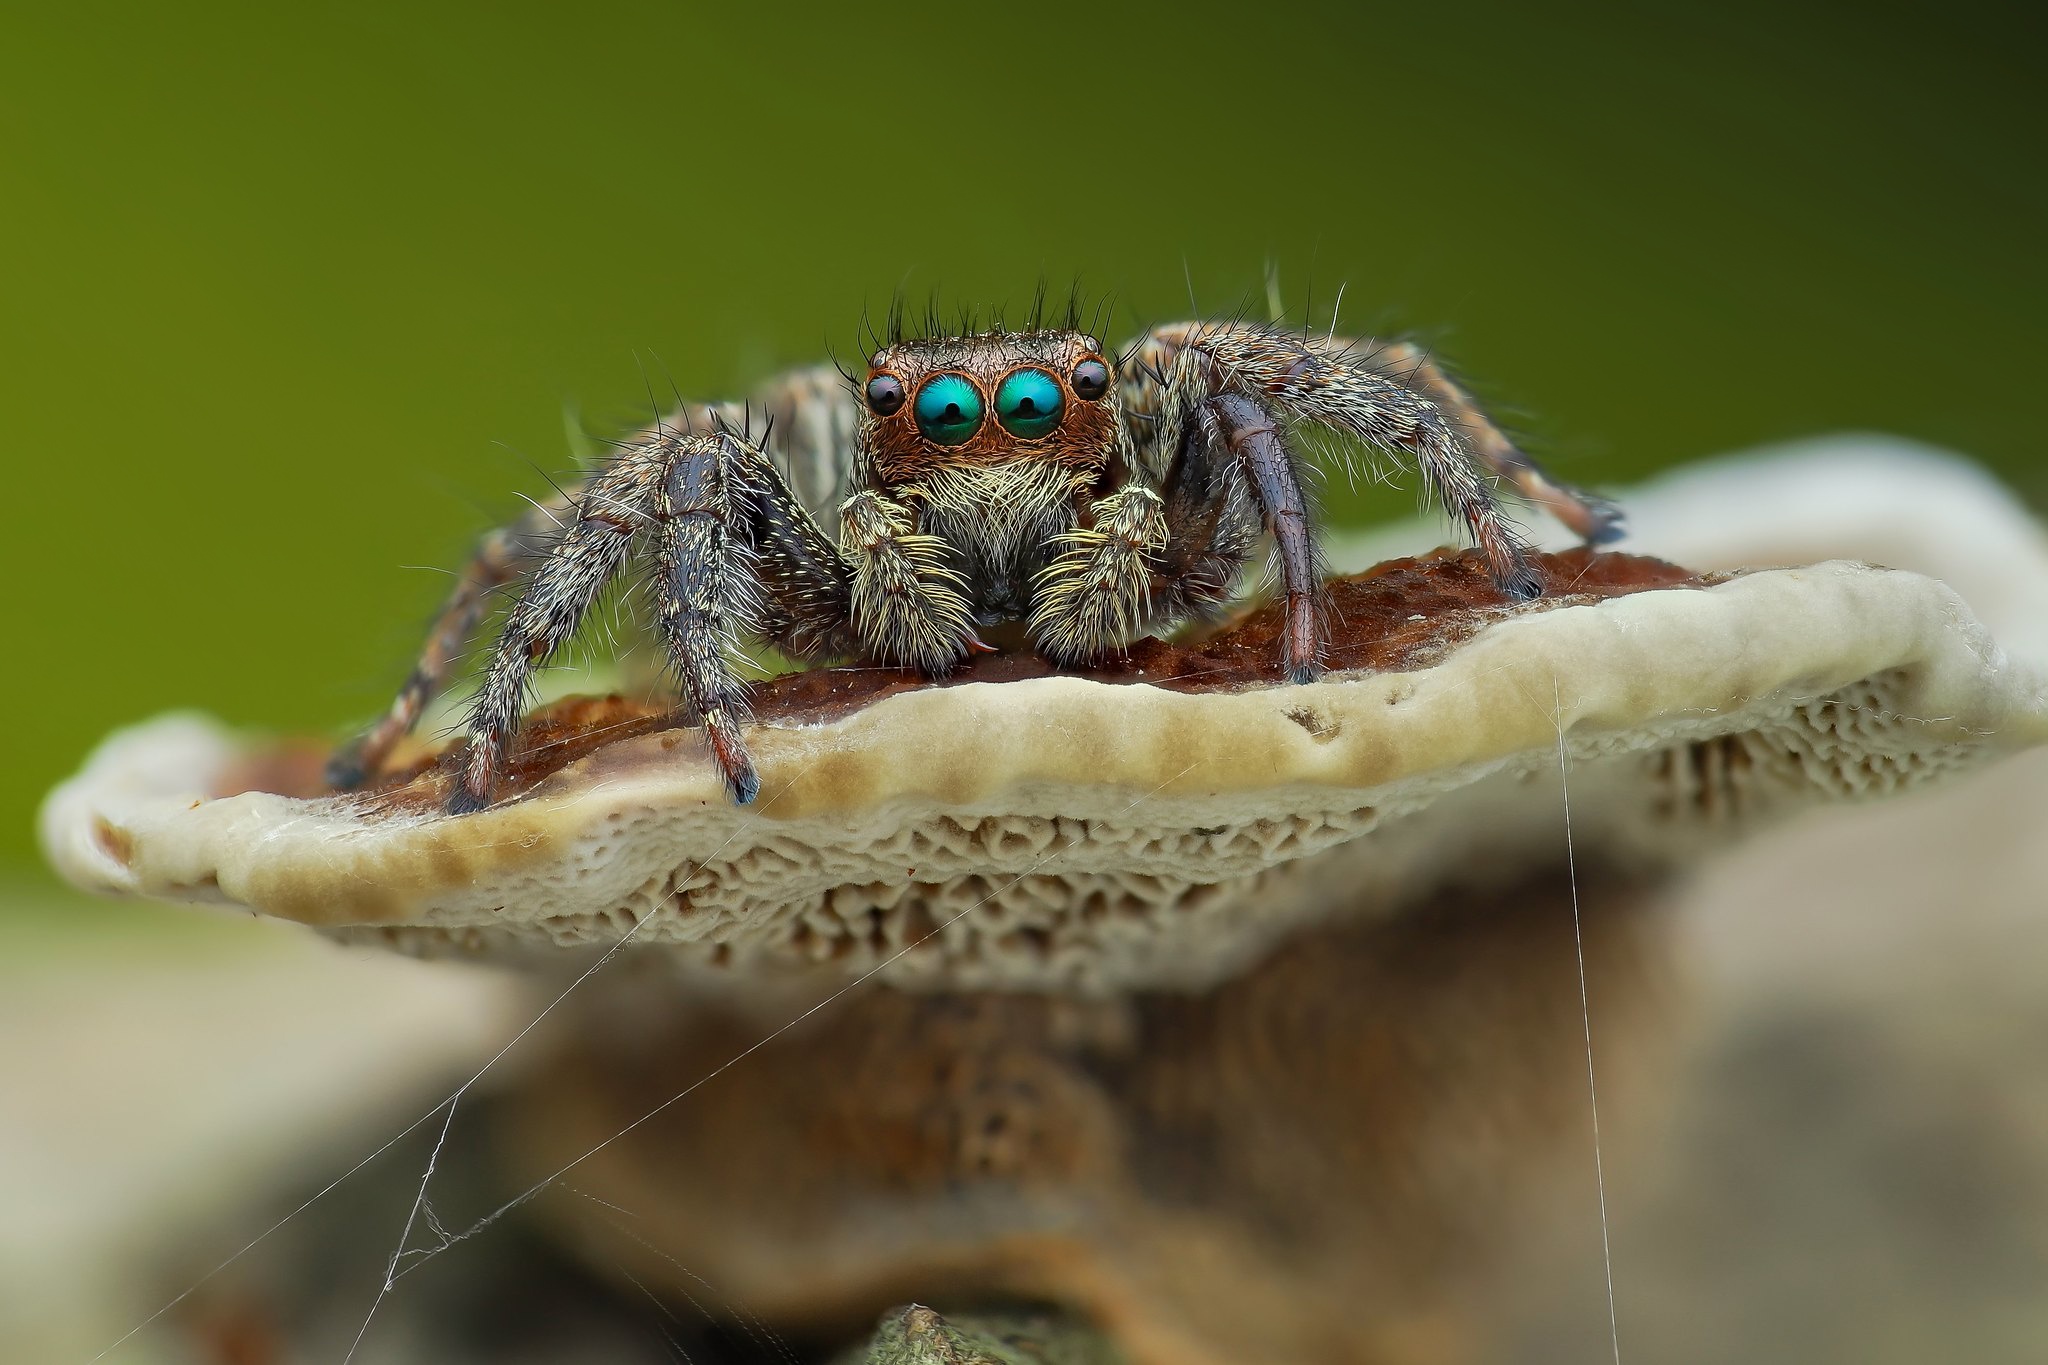 Паук скакун. образ жизни и среда обитания паука скакуна